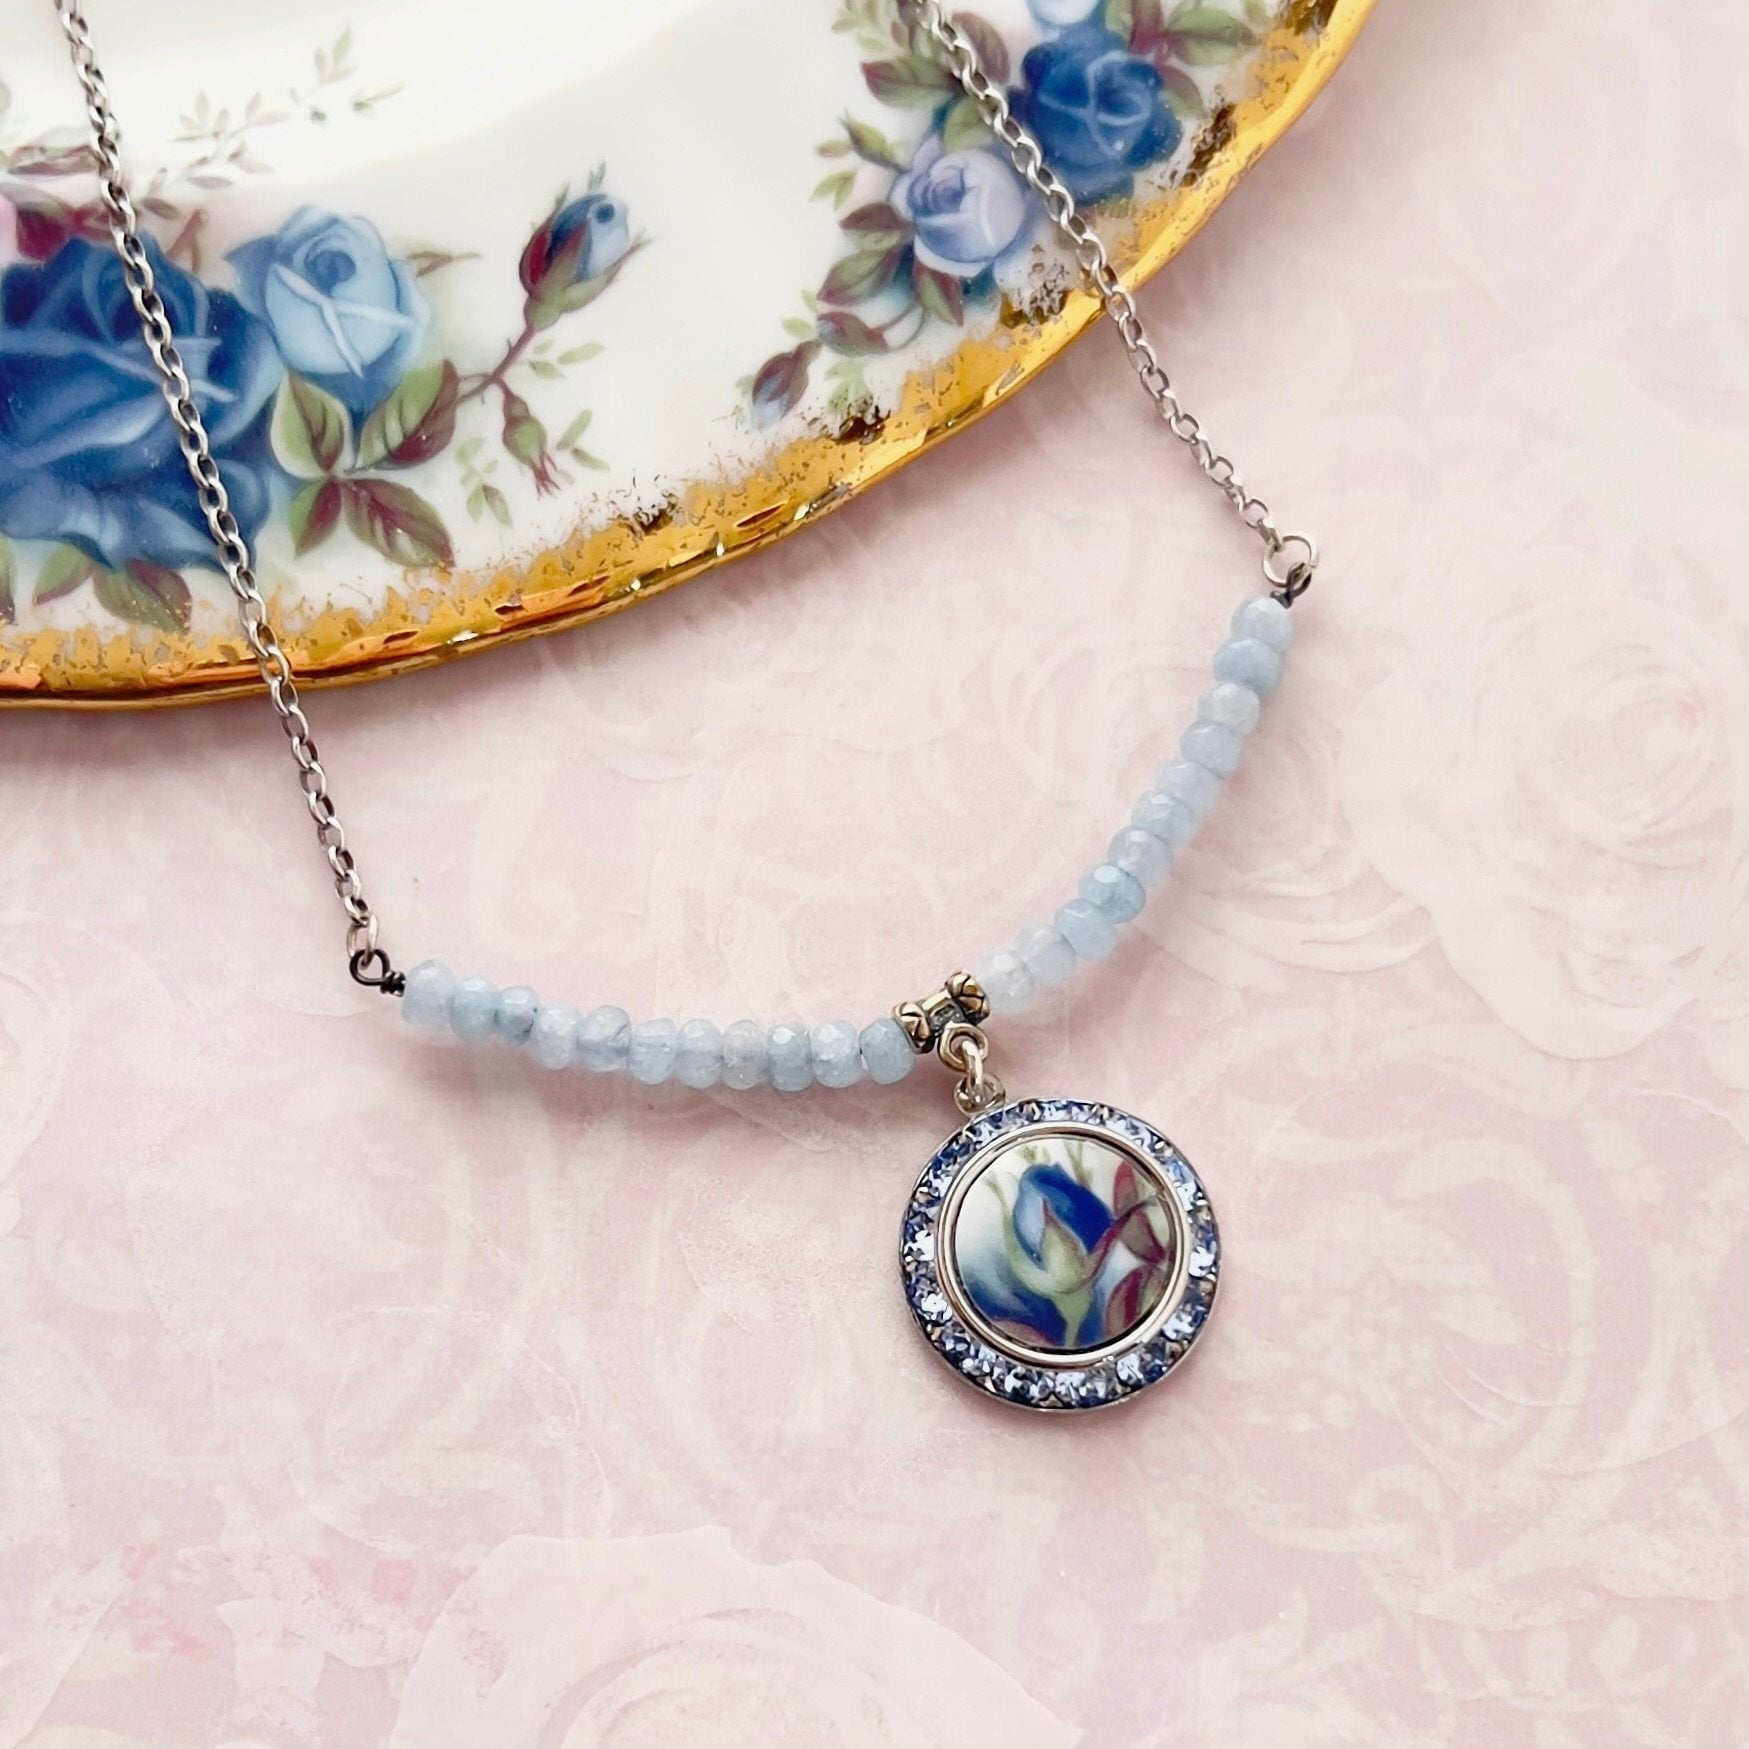 Moonlight Rose Aquamarine Necklace, Broken China Jewelry, Royal Albert China, Blue Rose Gemstone Bar Necklace, Graduation Gifts